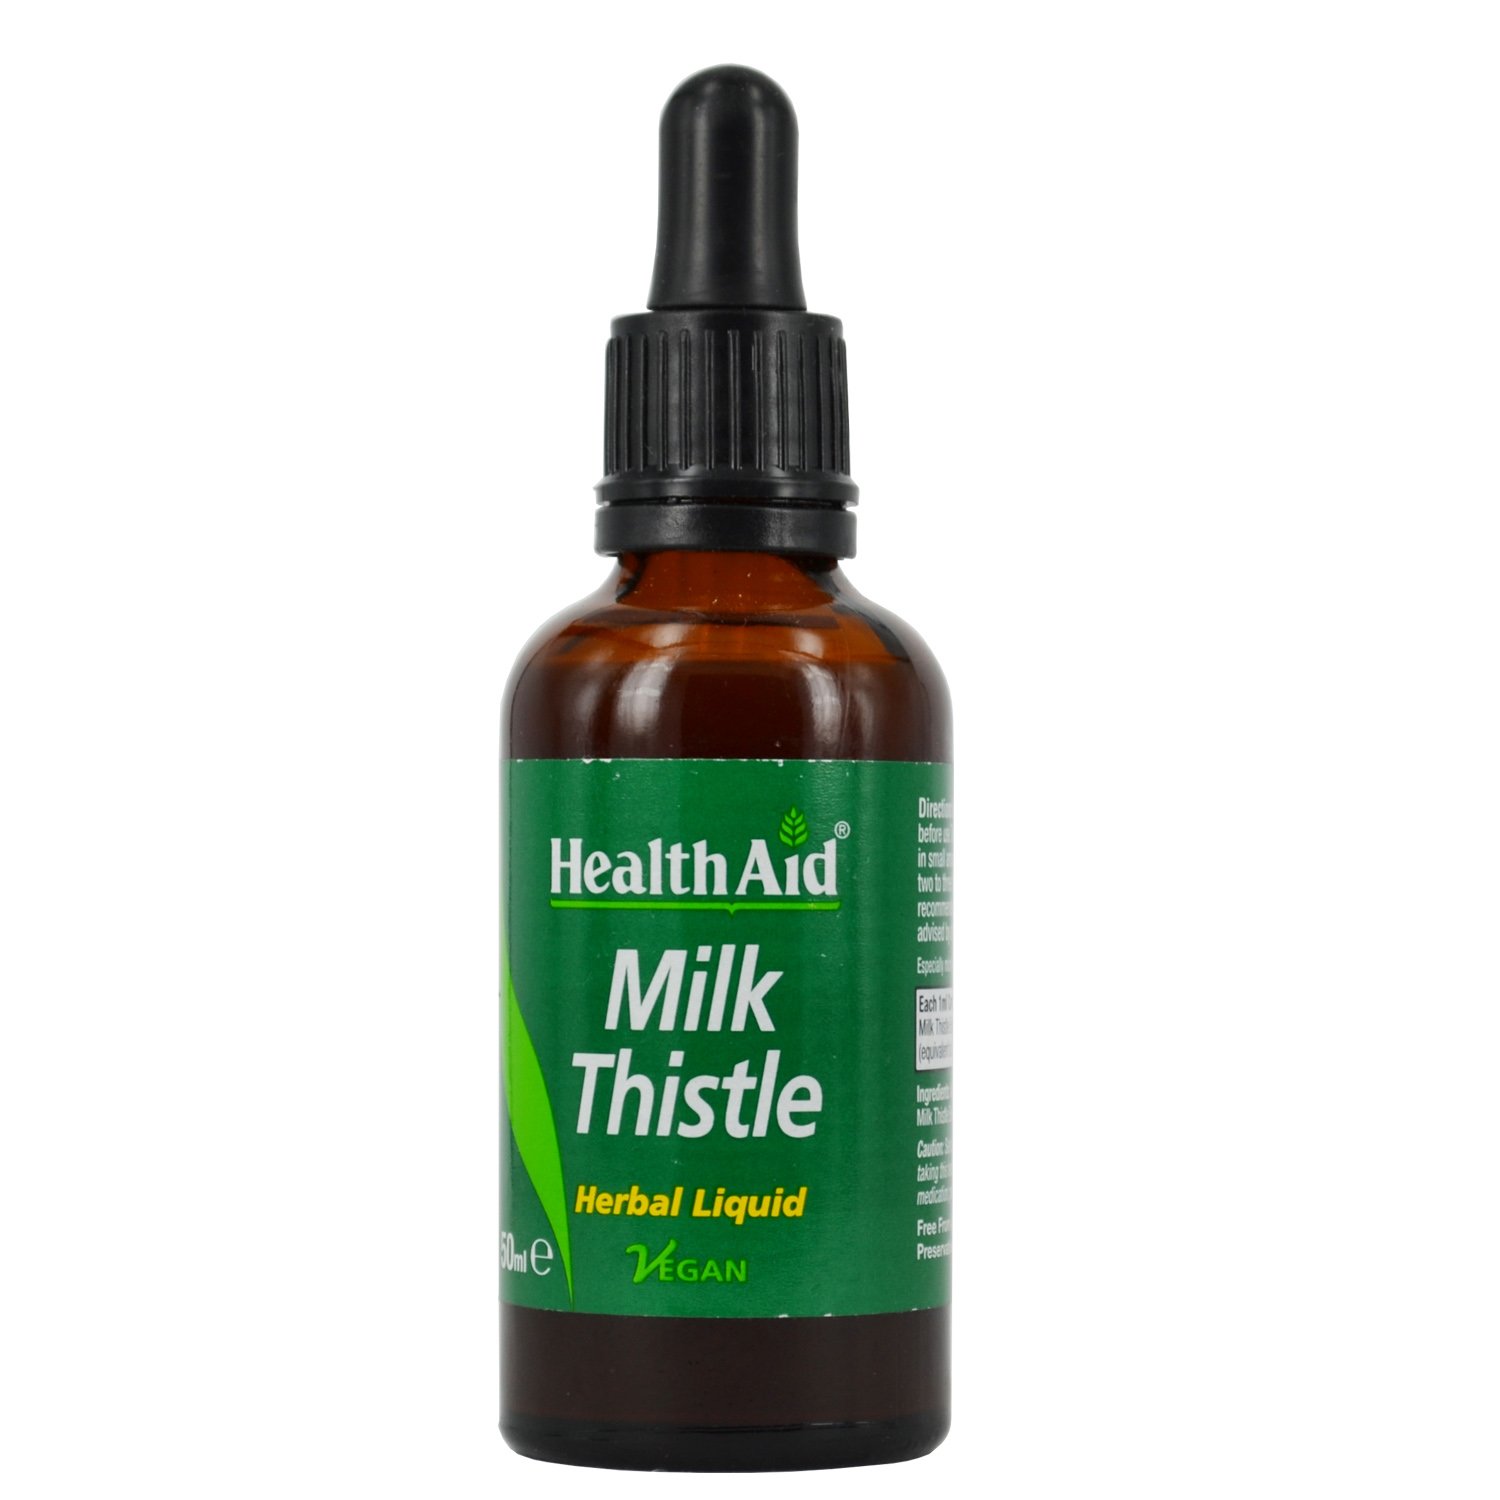 Health Aid Milk Thistle Liquid Γαϊδουράγκαθο Σε Σταγόνες 50ml